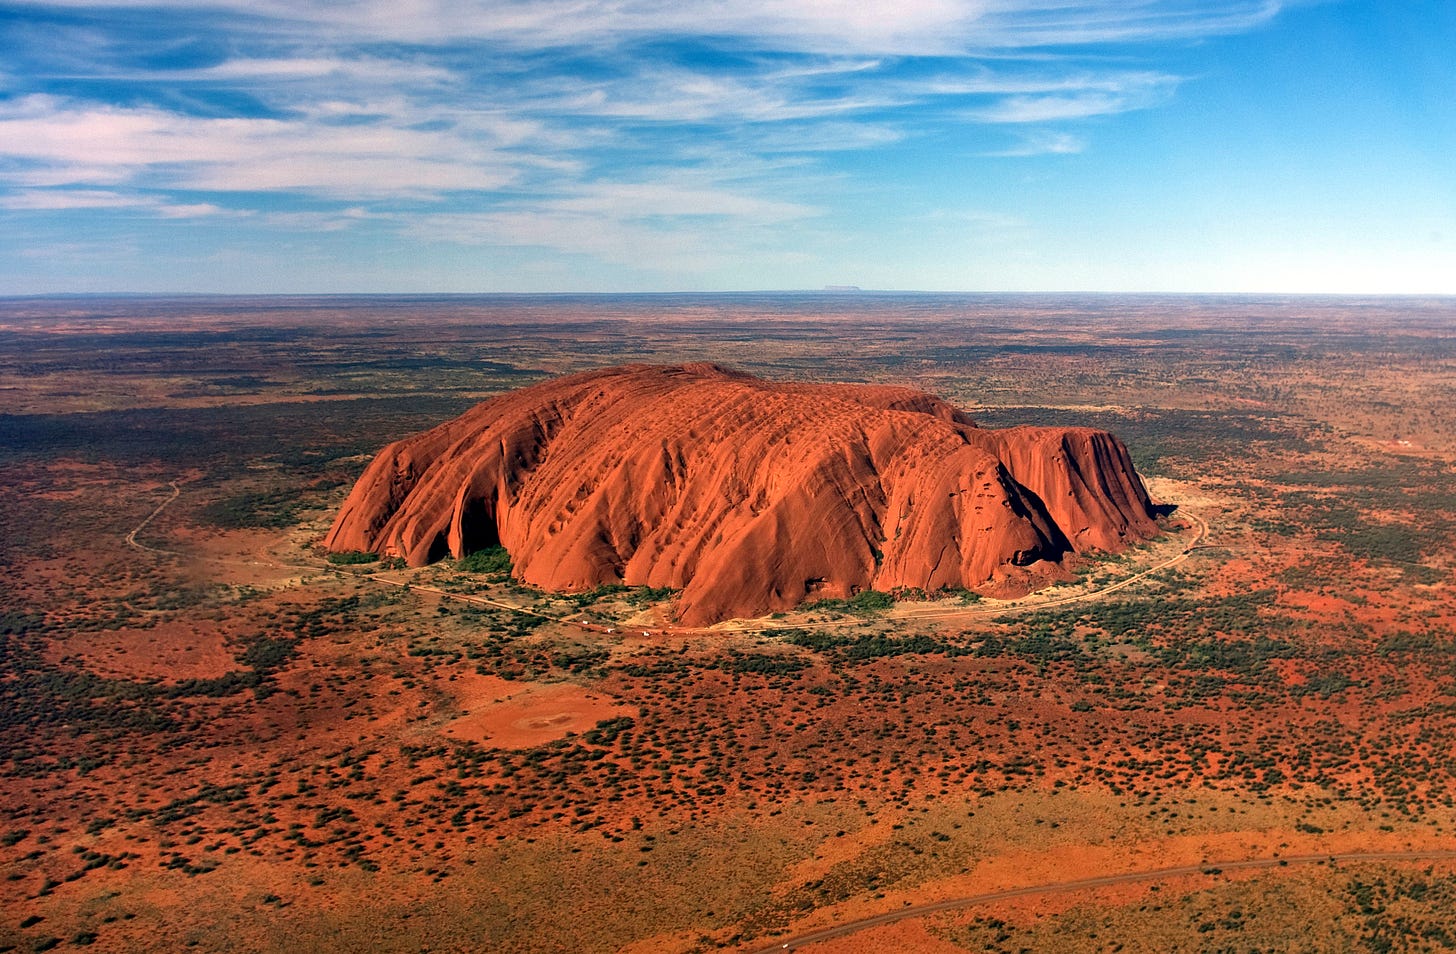 File:Uluru, helicopter view, cropped.jpg - Wikimedia Commons